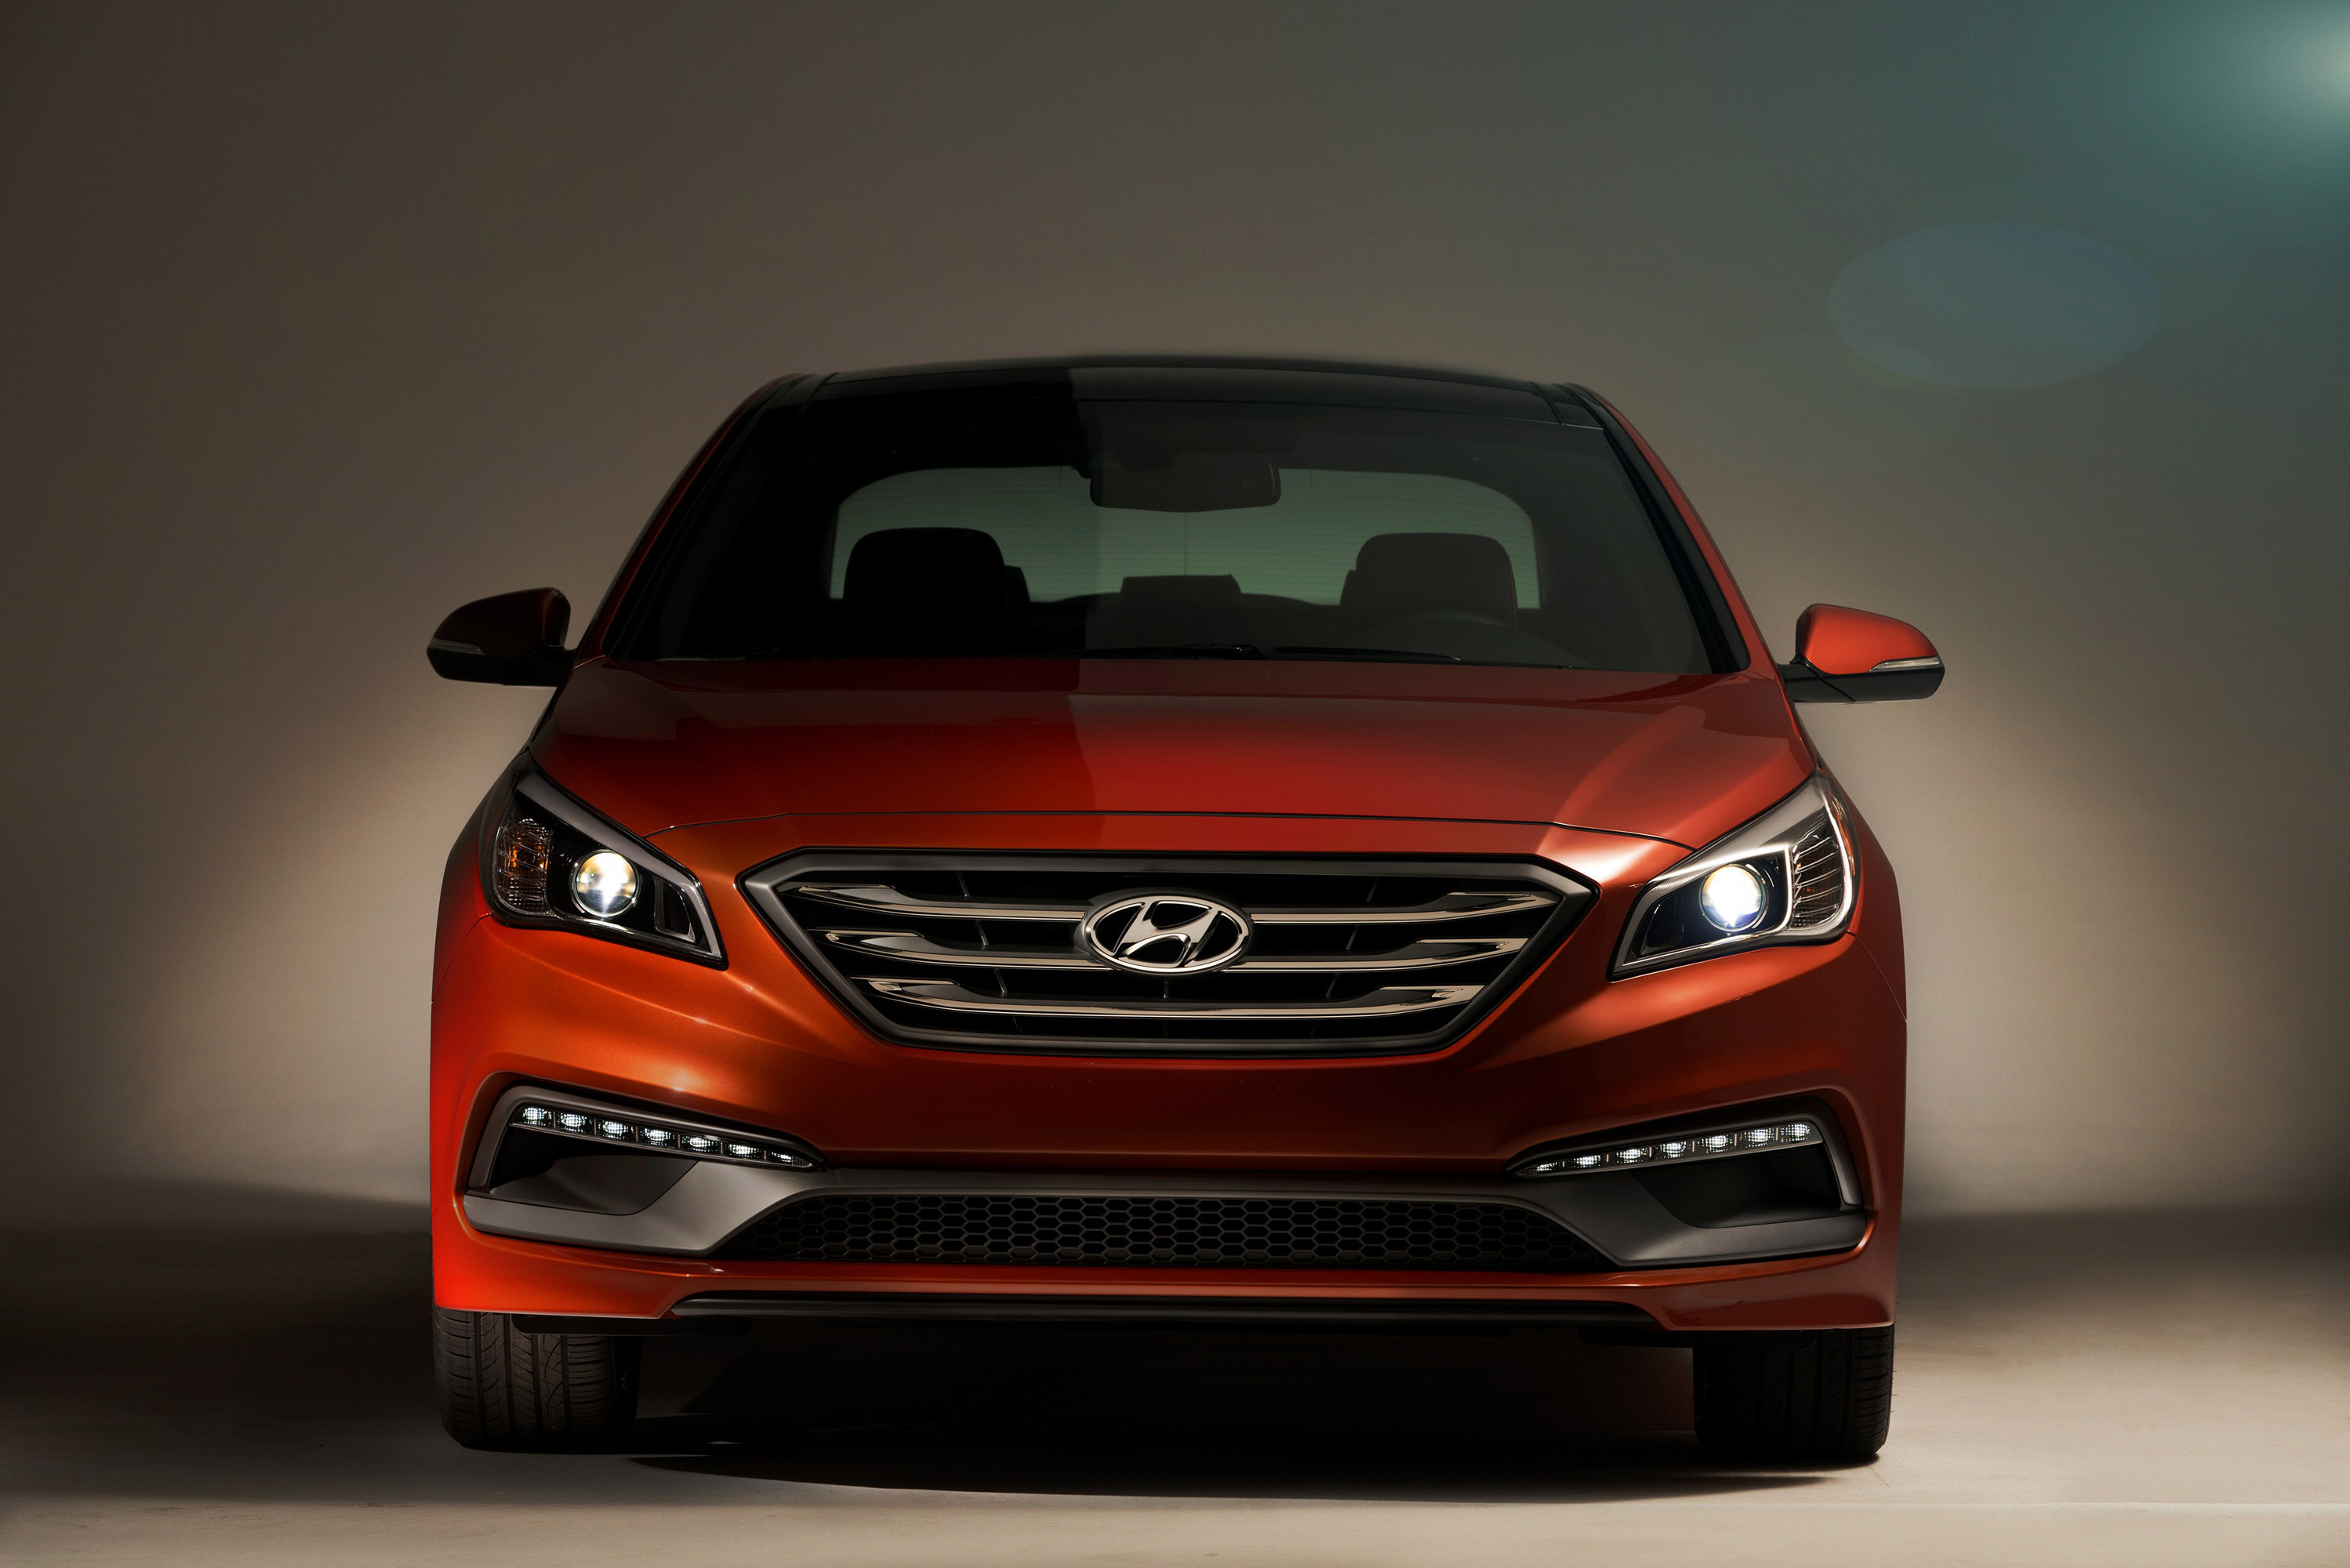 2015 Hyundai Sonata - HD Pictures @ carsinvasion.com